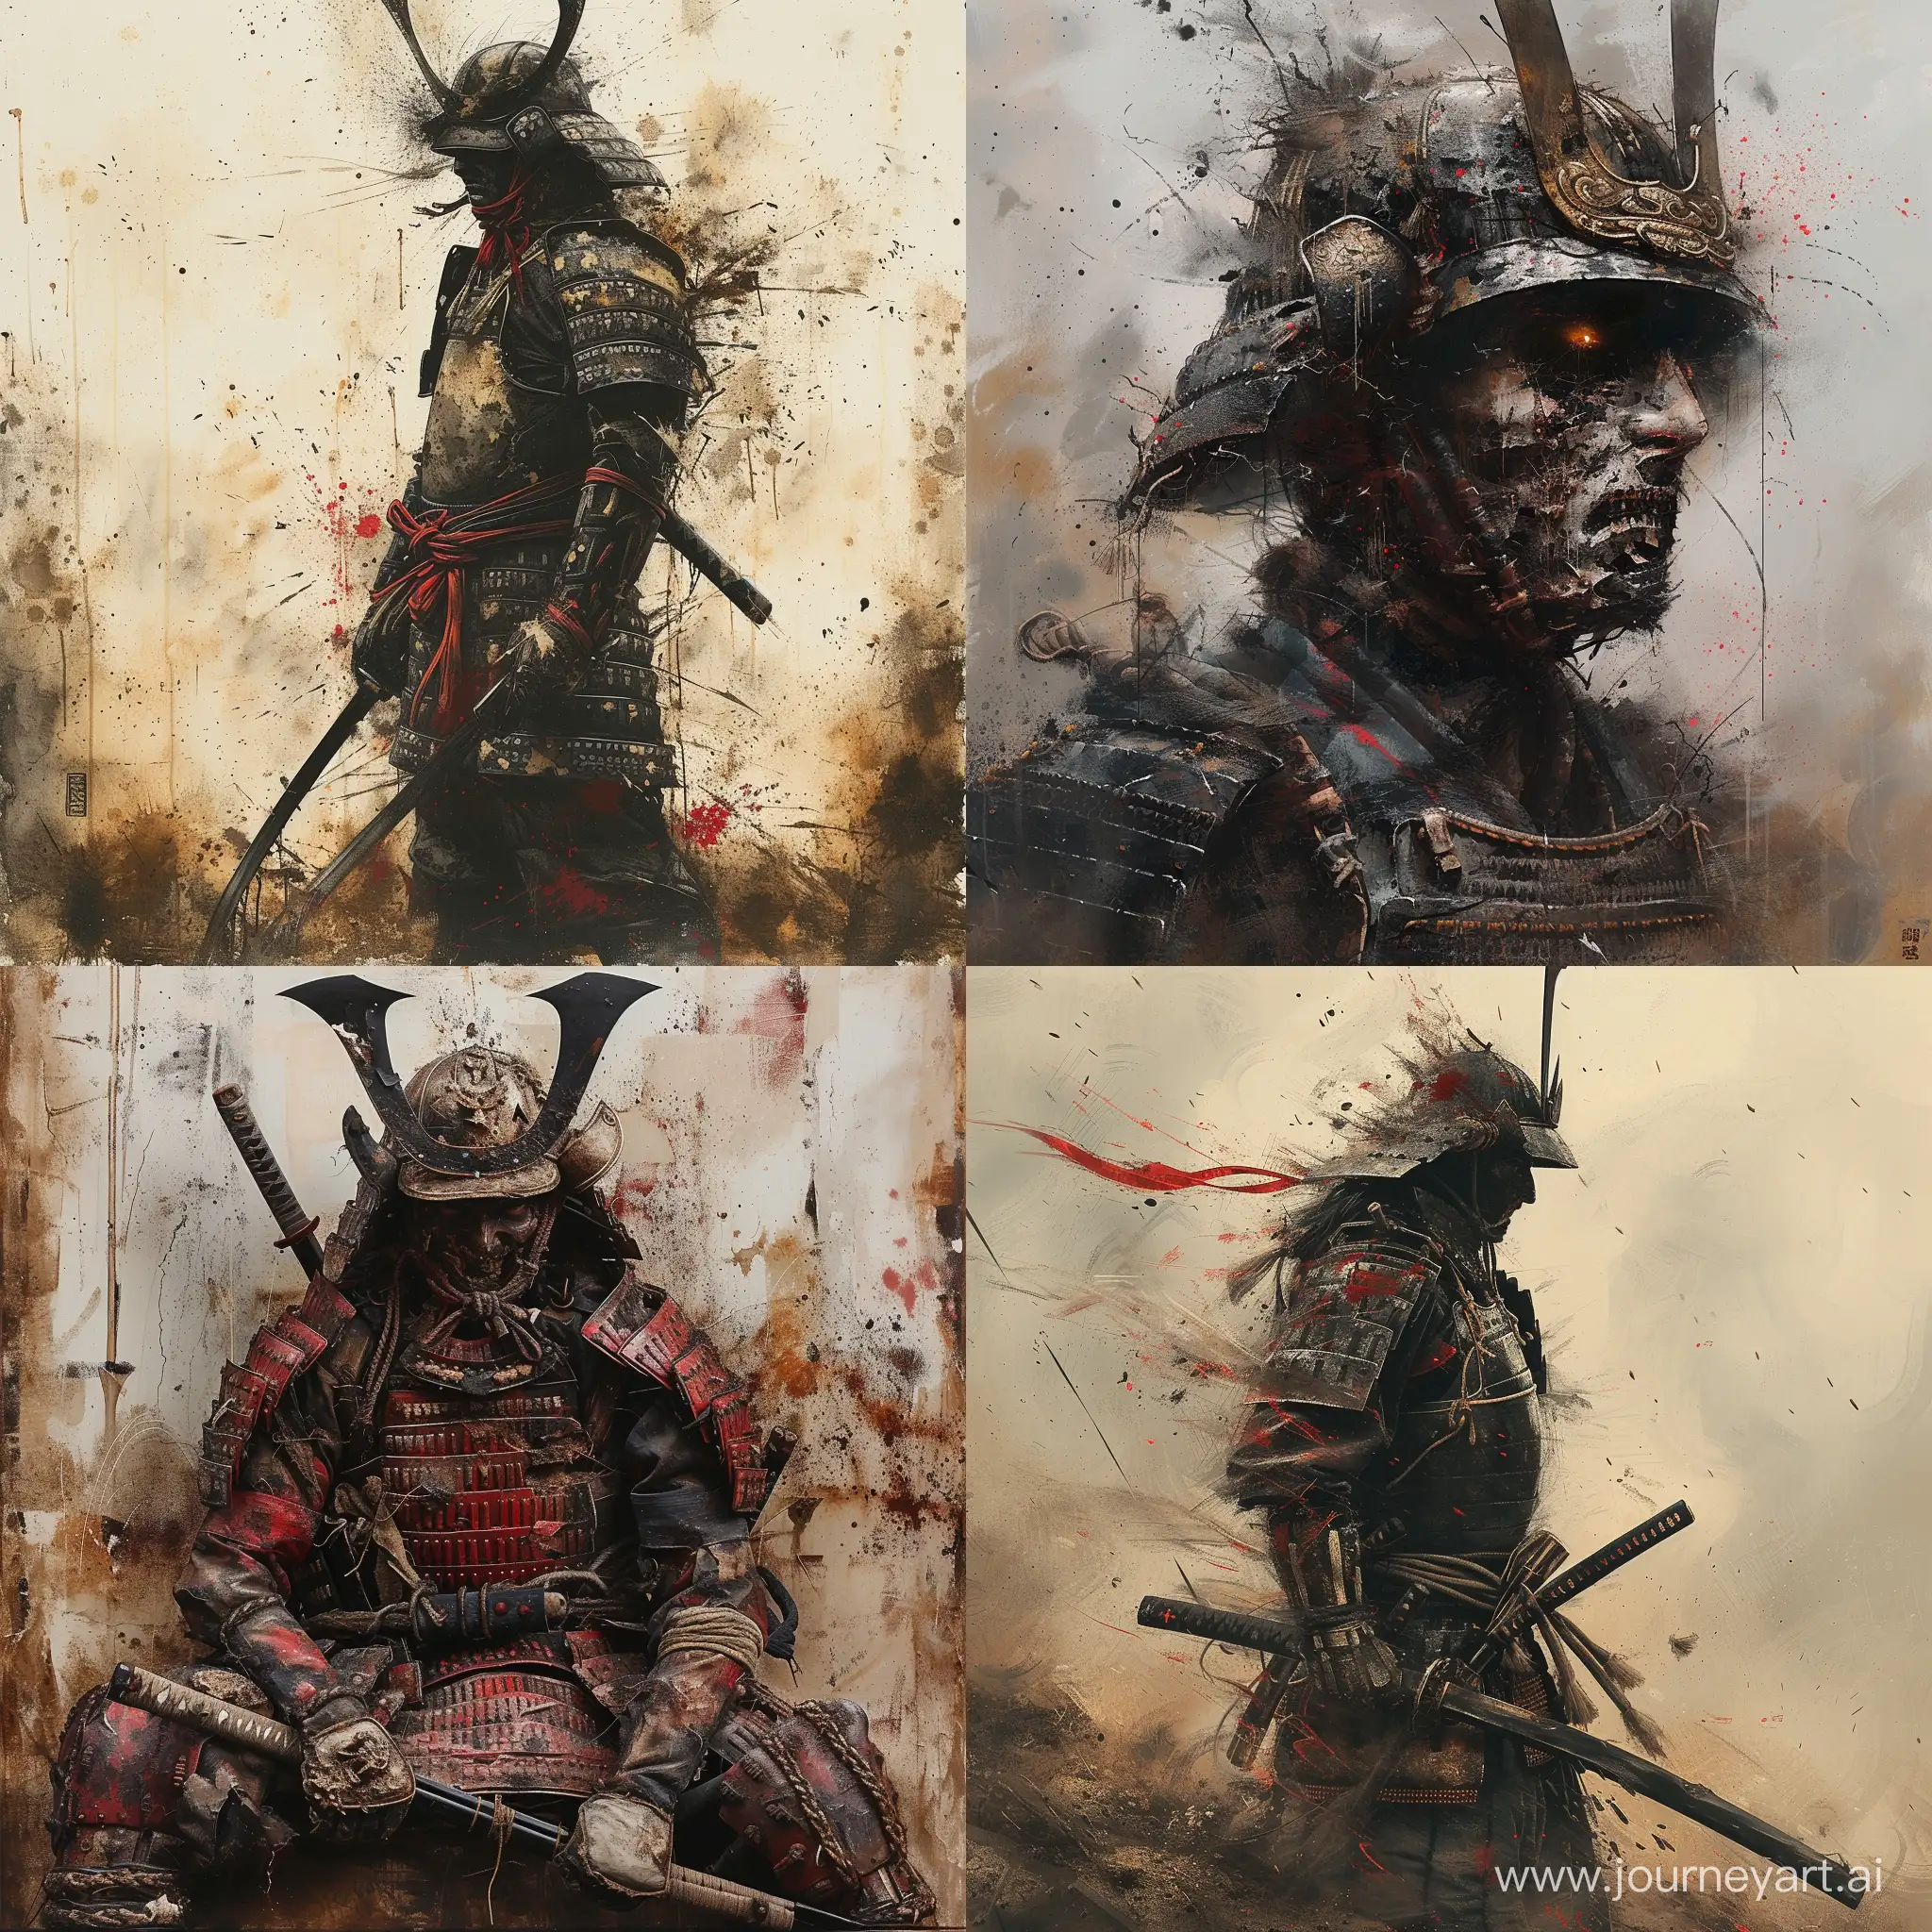 Wounded-Samurai-in-Surrealistic-Battle-Scene